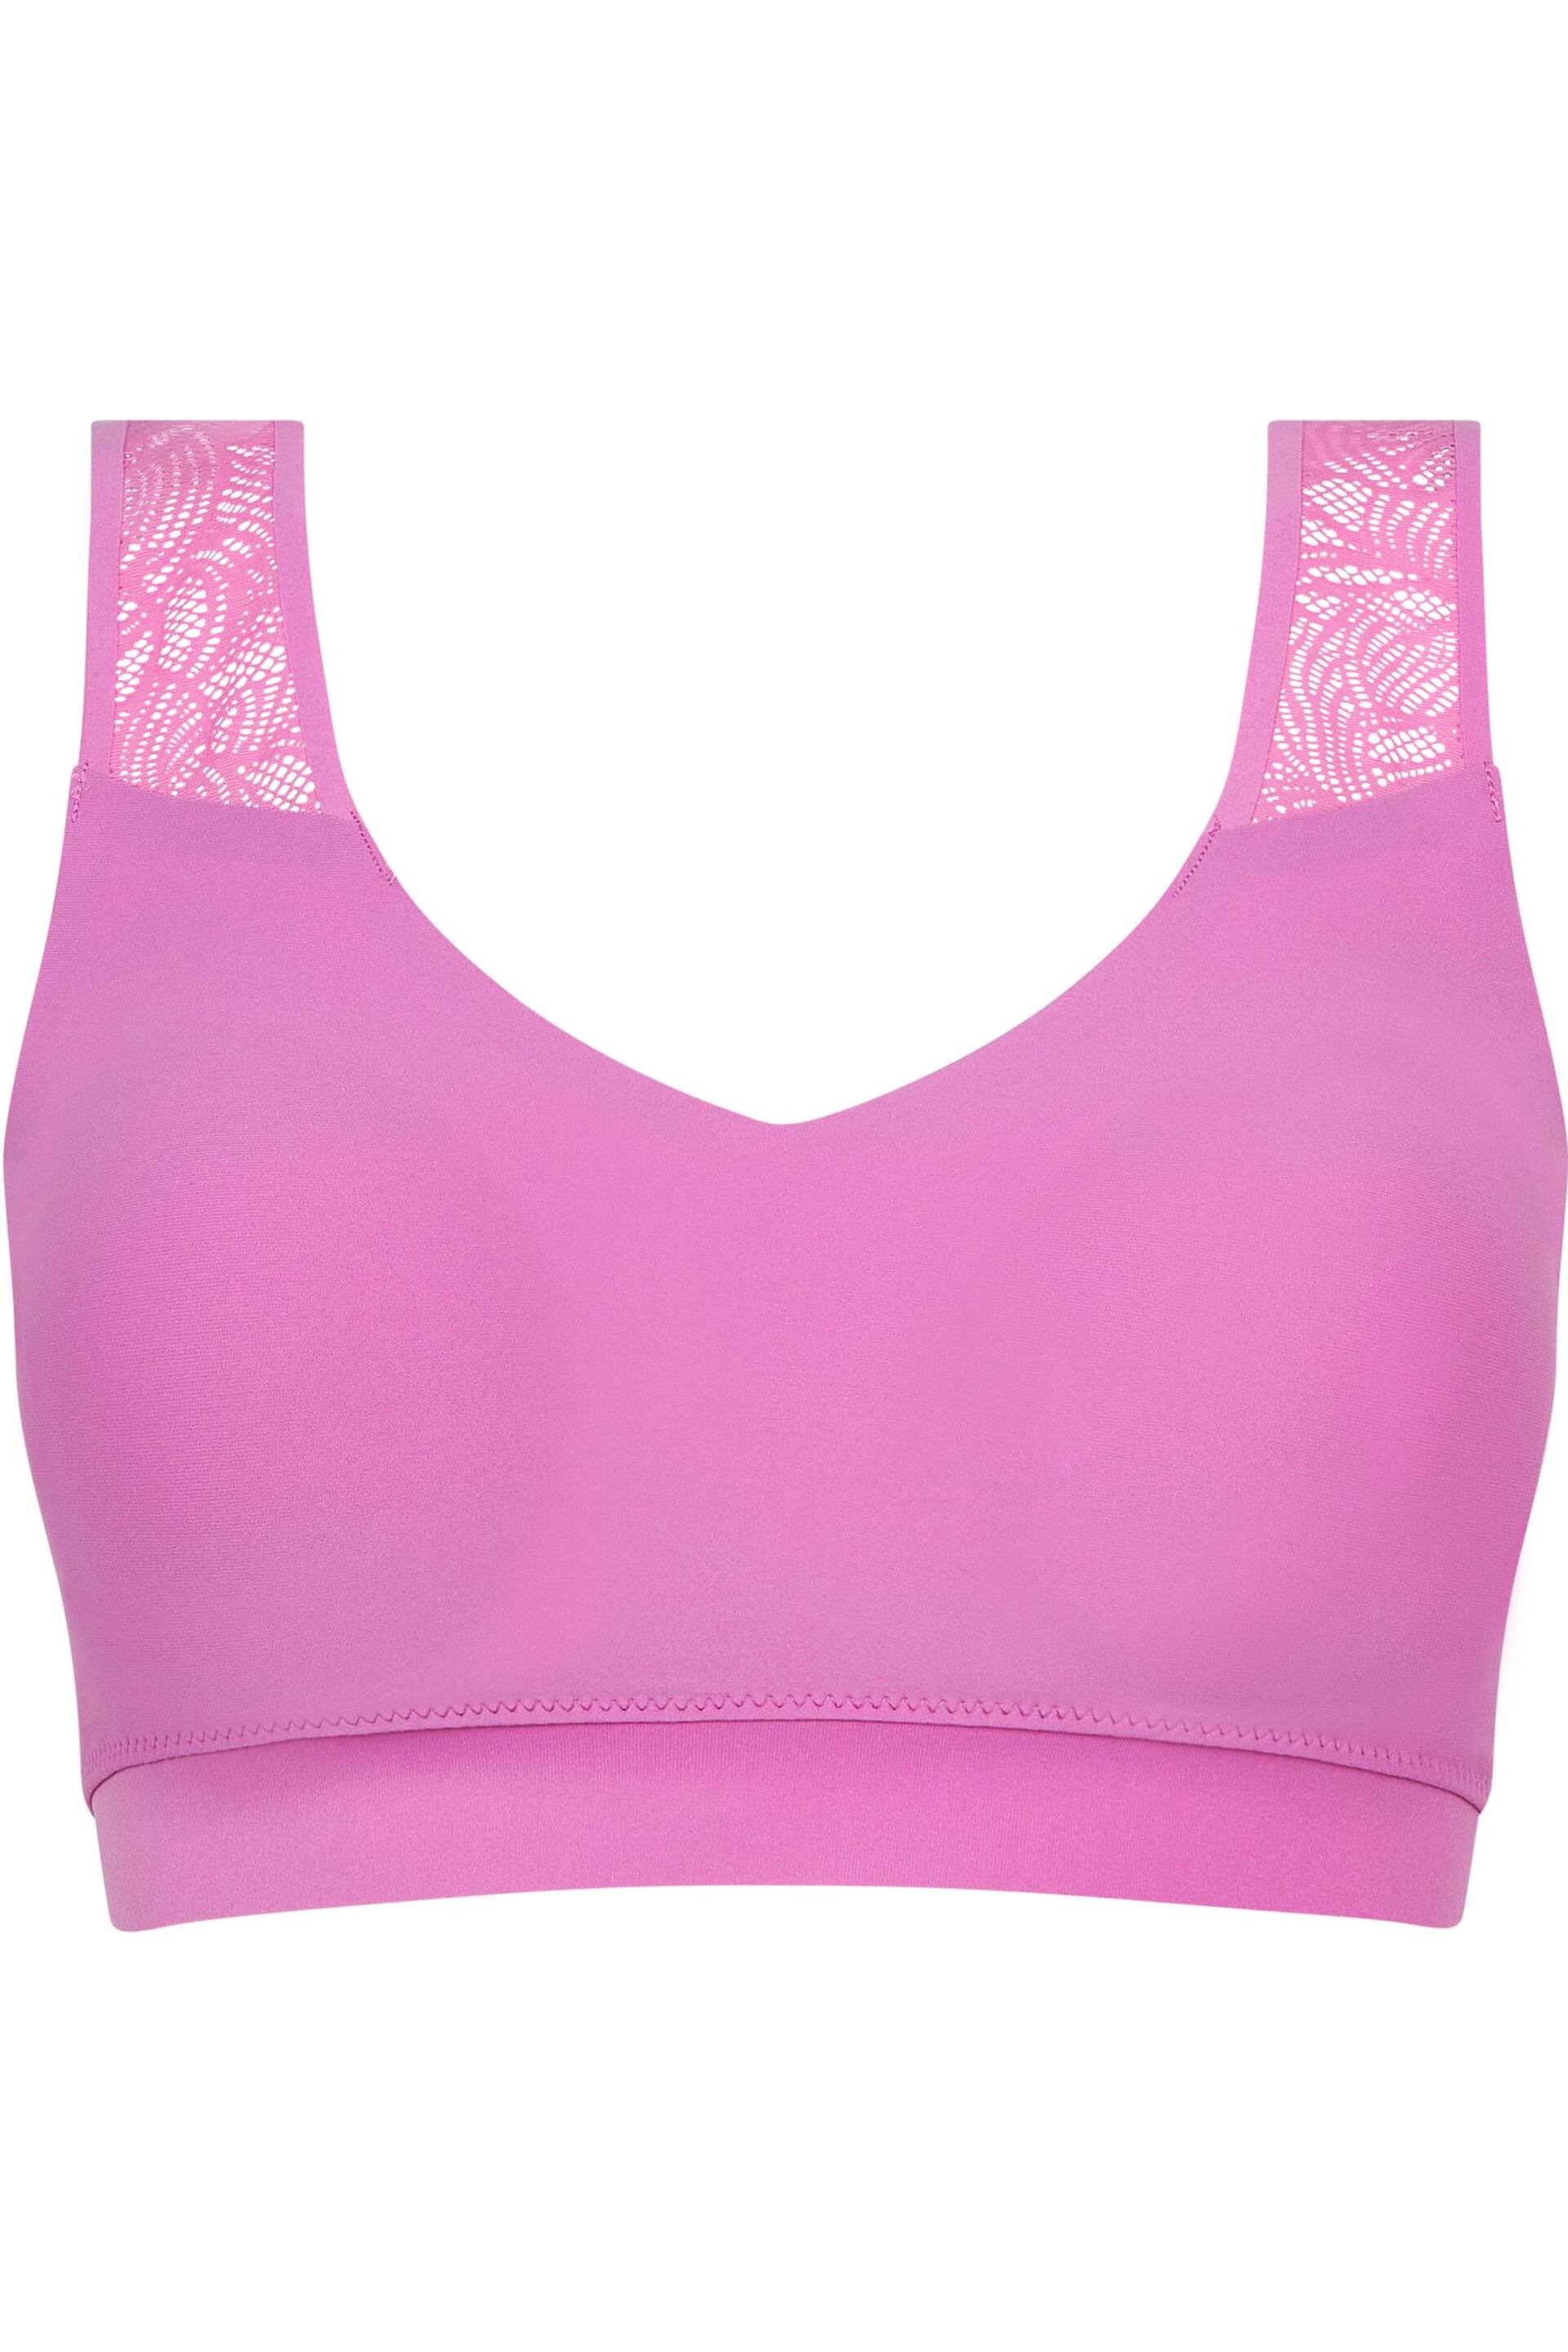 Chantelle Pink Rosebud Soft Stretch Lace V-Neck Padded Crop Top Bralette - Image 6 of 6